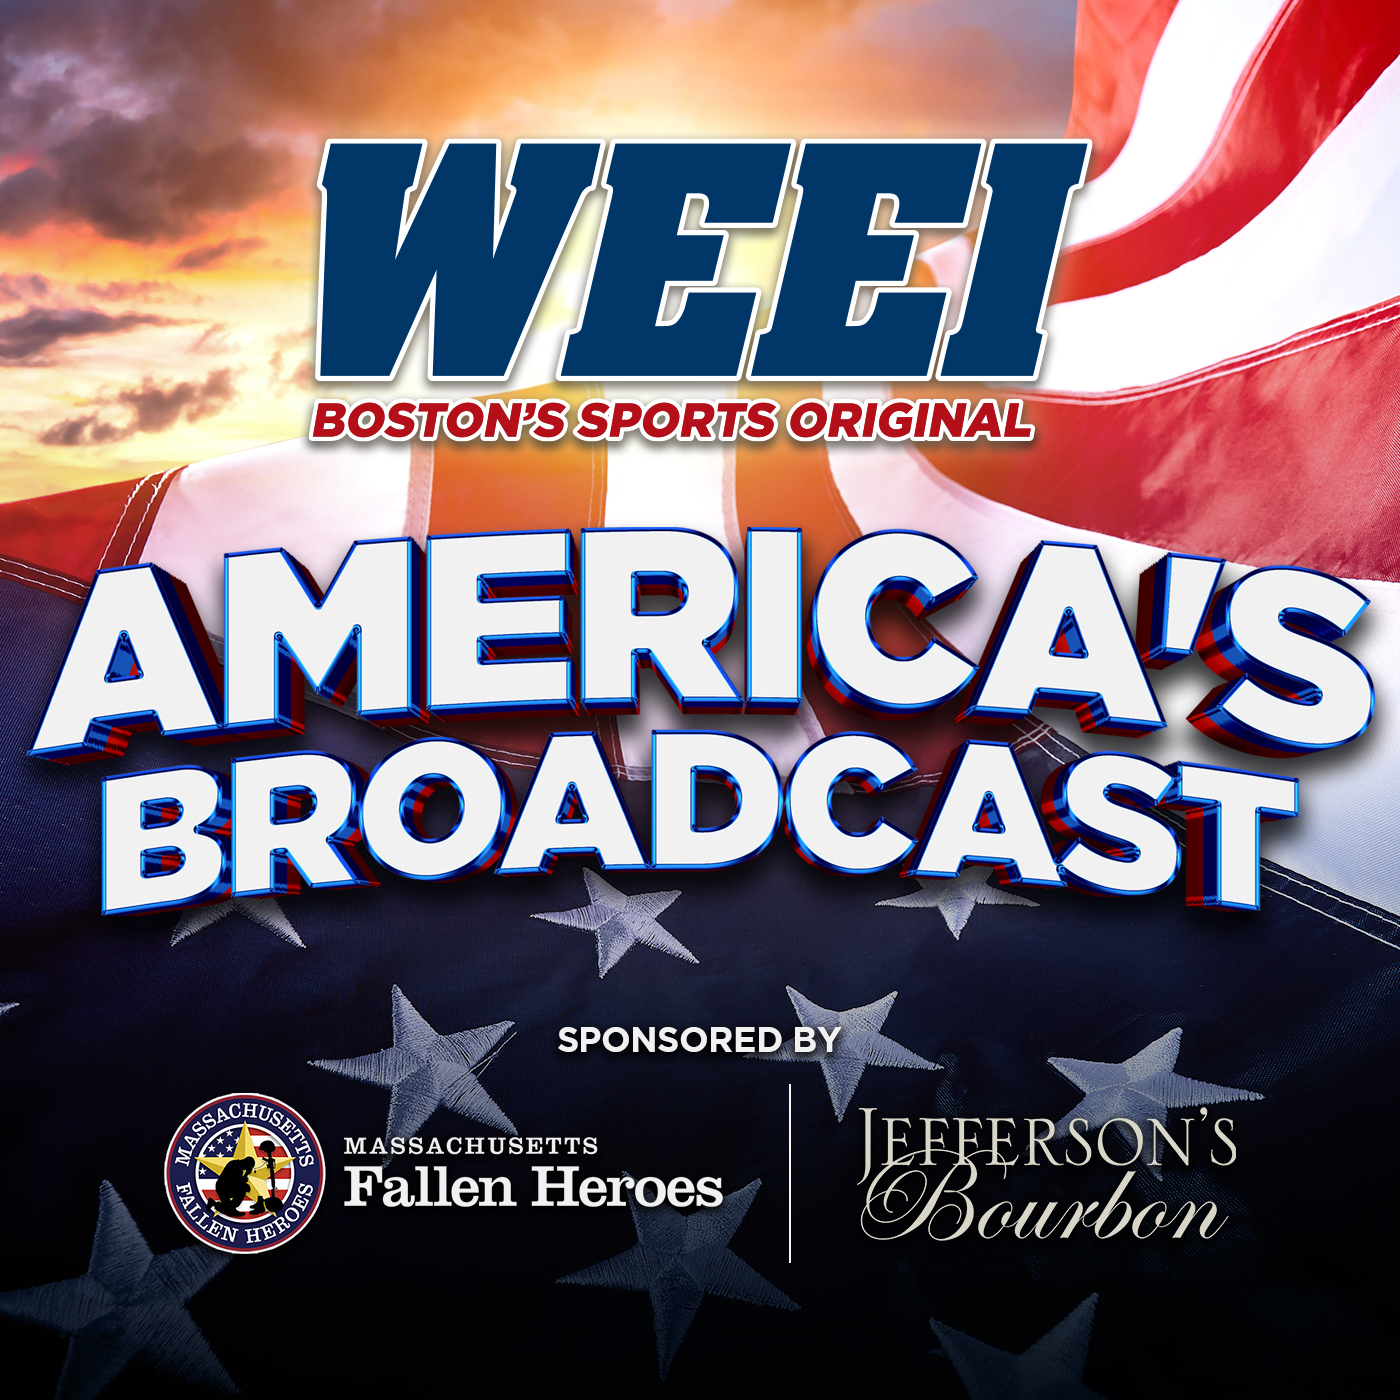 WEEI Americas Broadcast